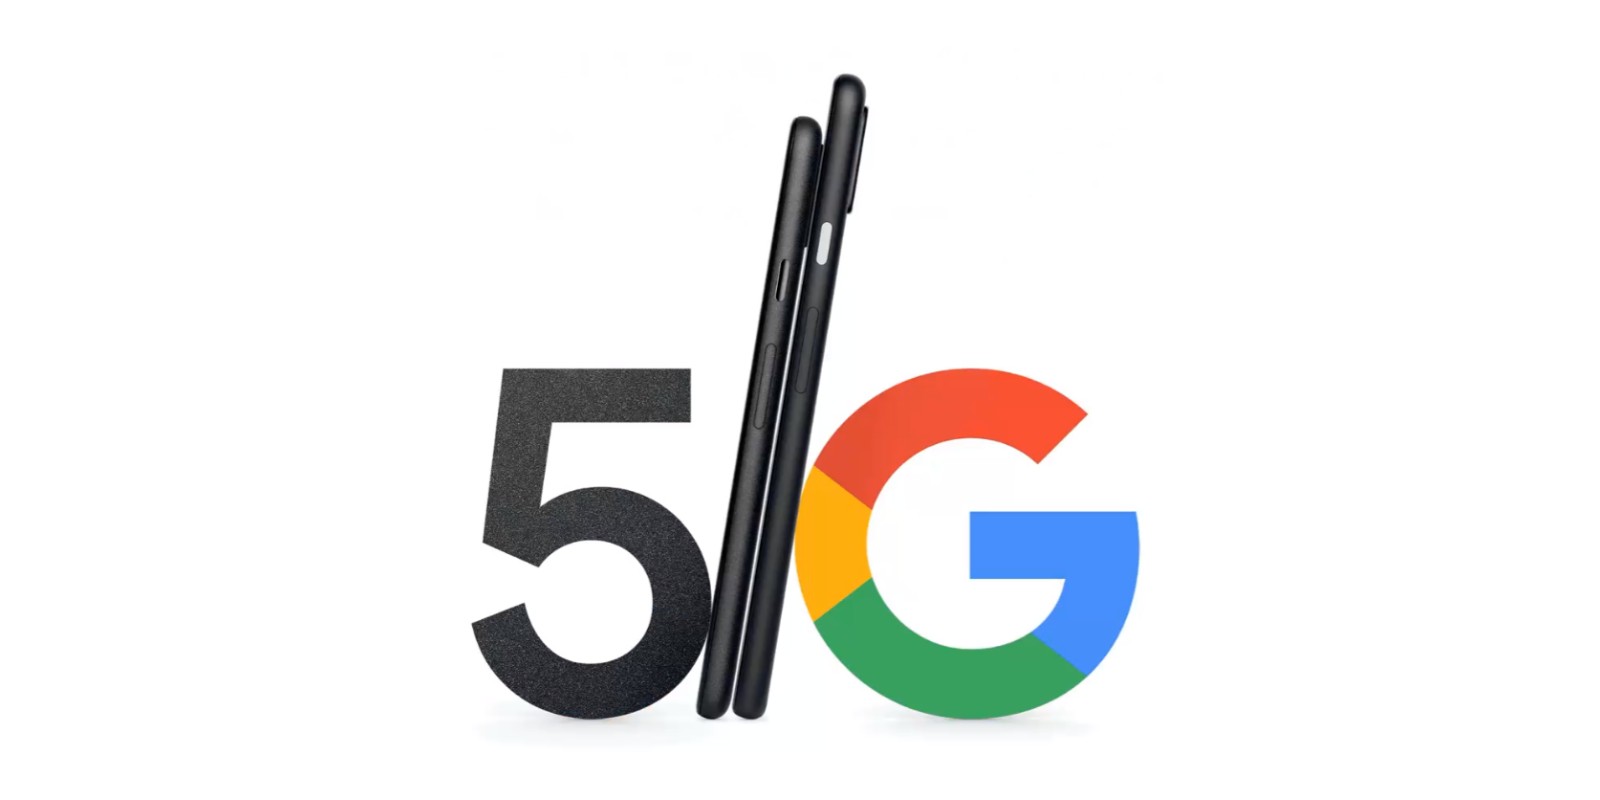 Google Pixel 5 and Pixel 4a (5G)